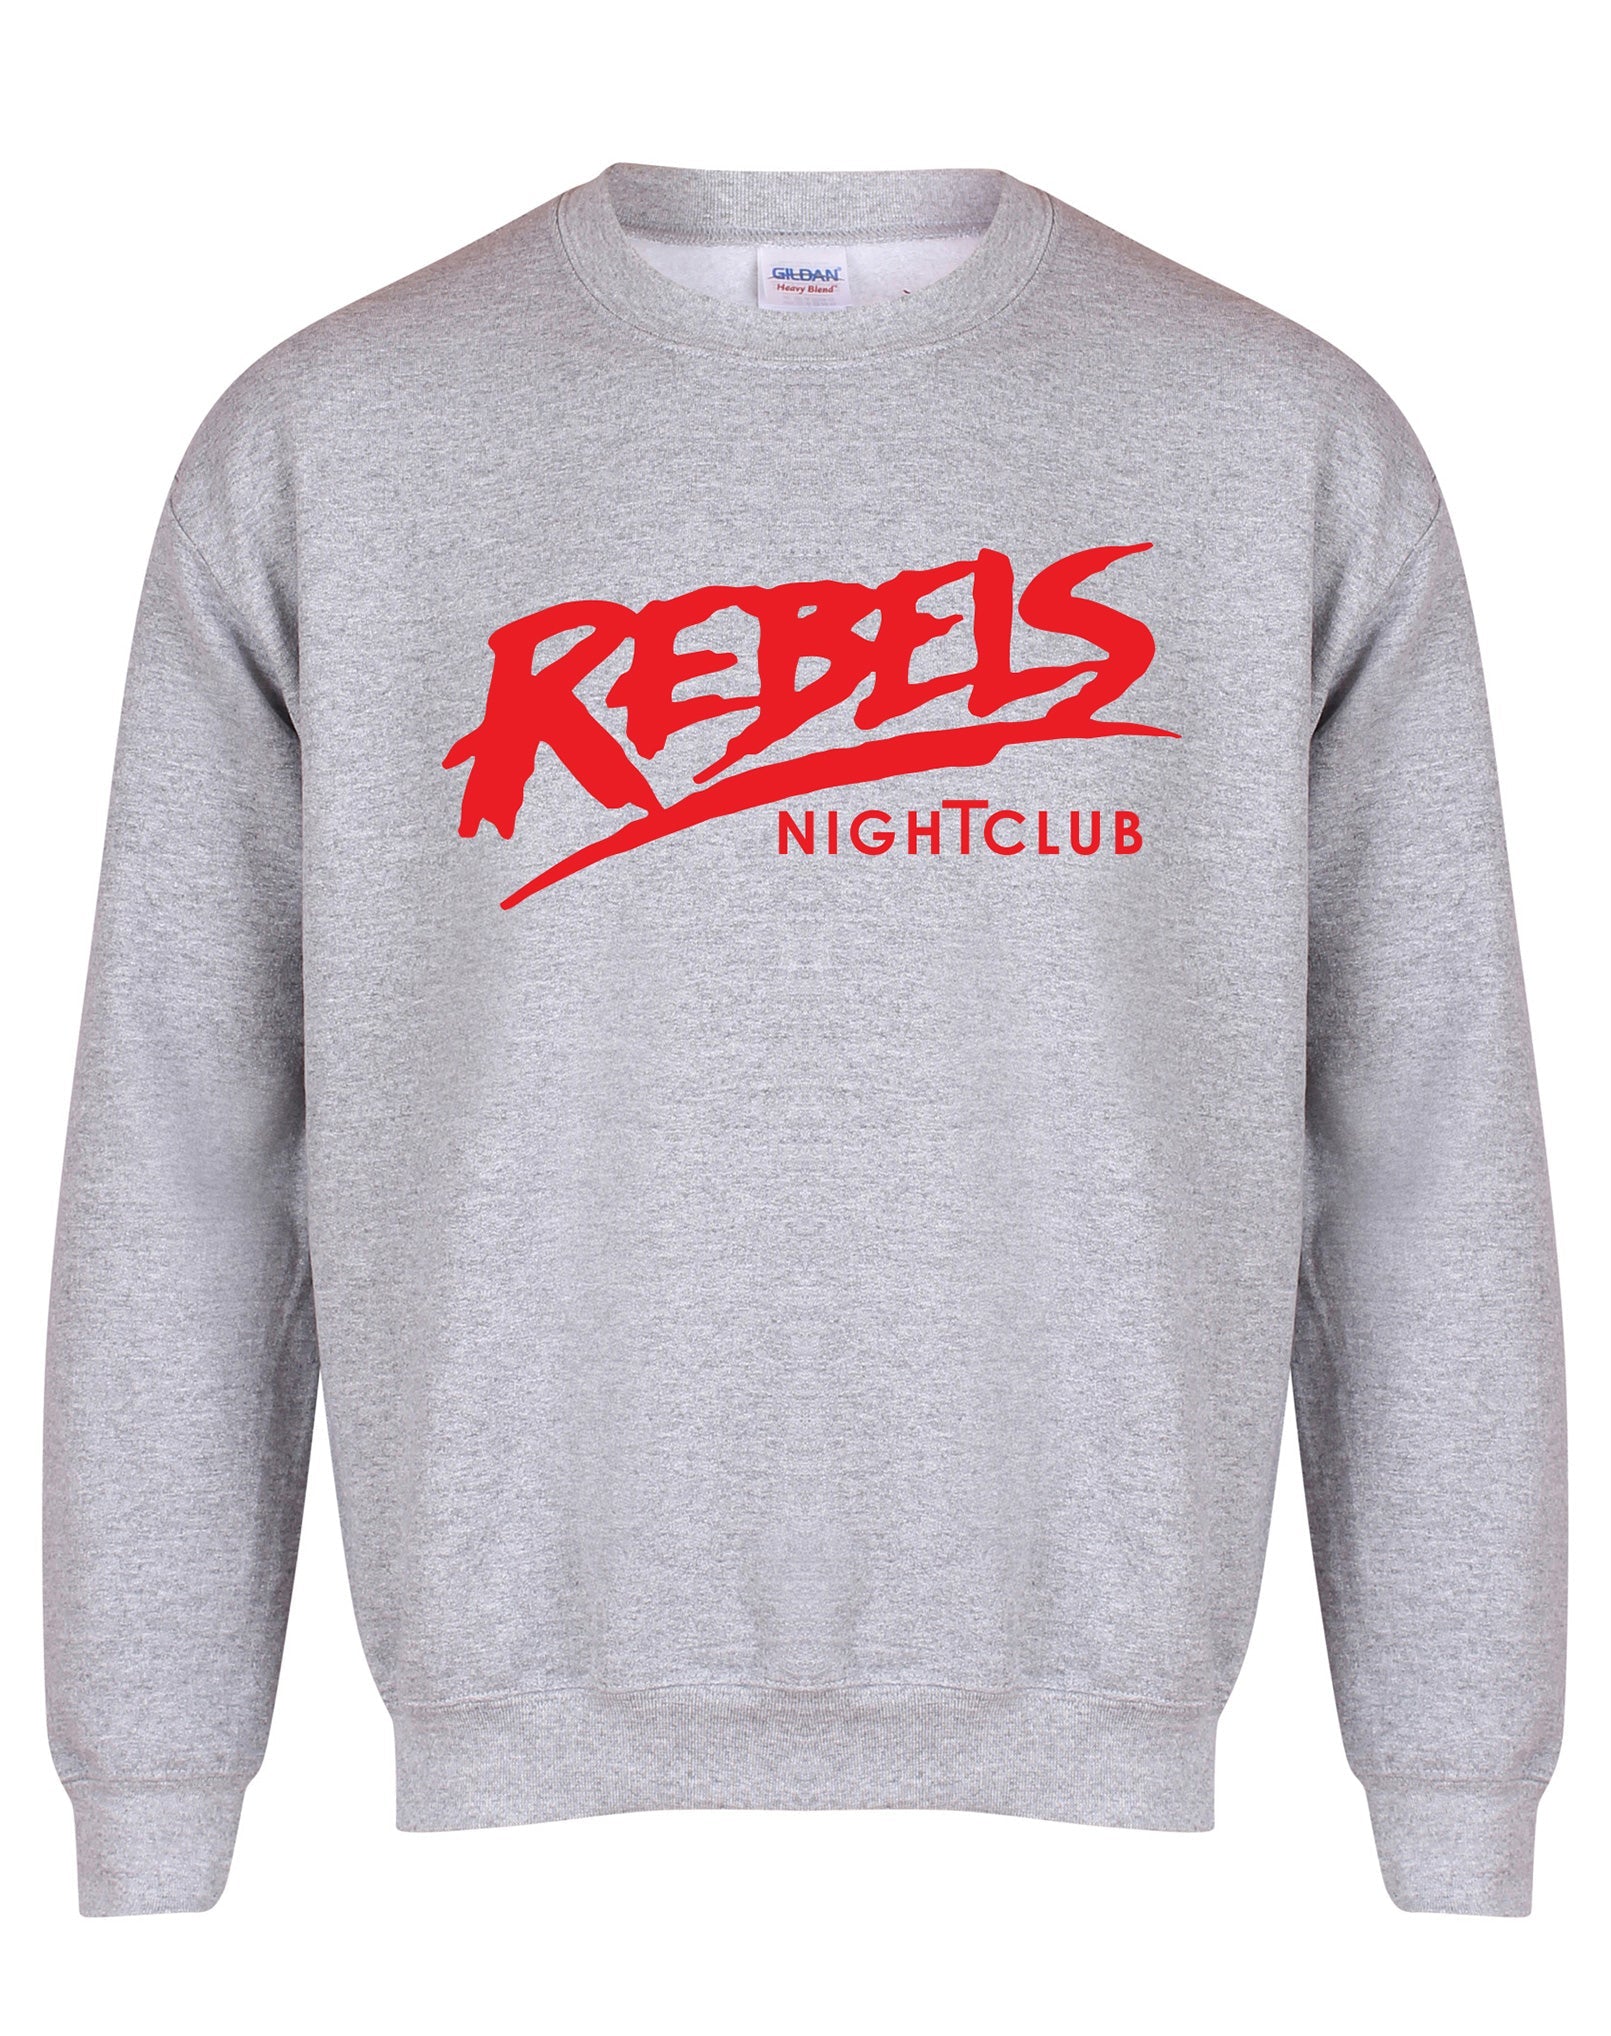 Rebels original sign unisex fit sweatshirt - various colours - Dirty Stop Outs